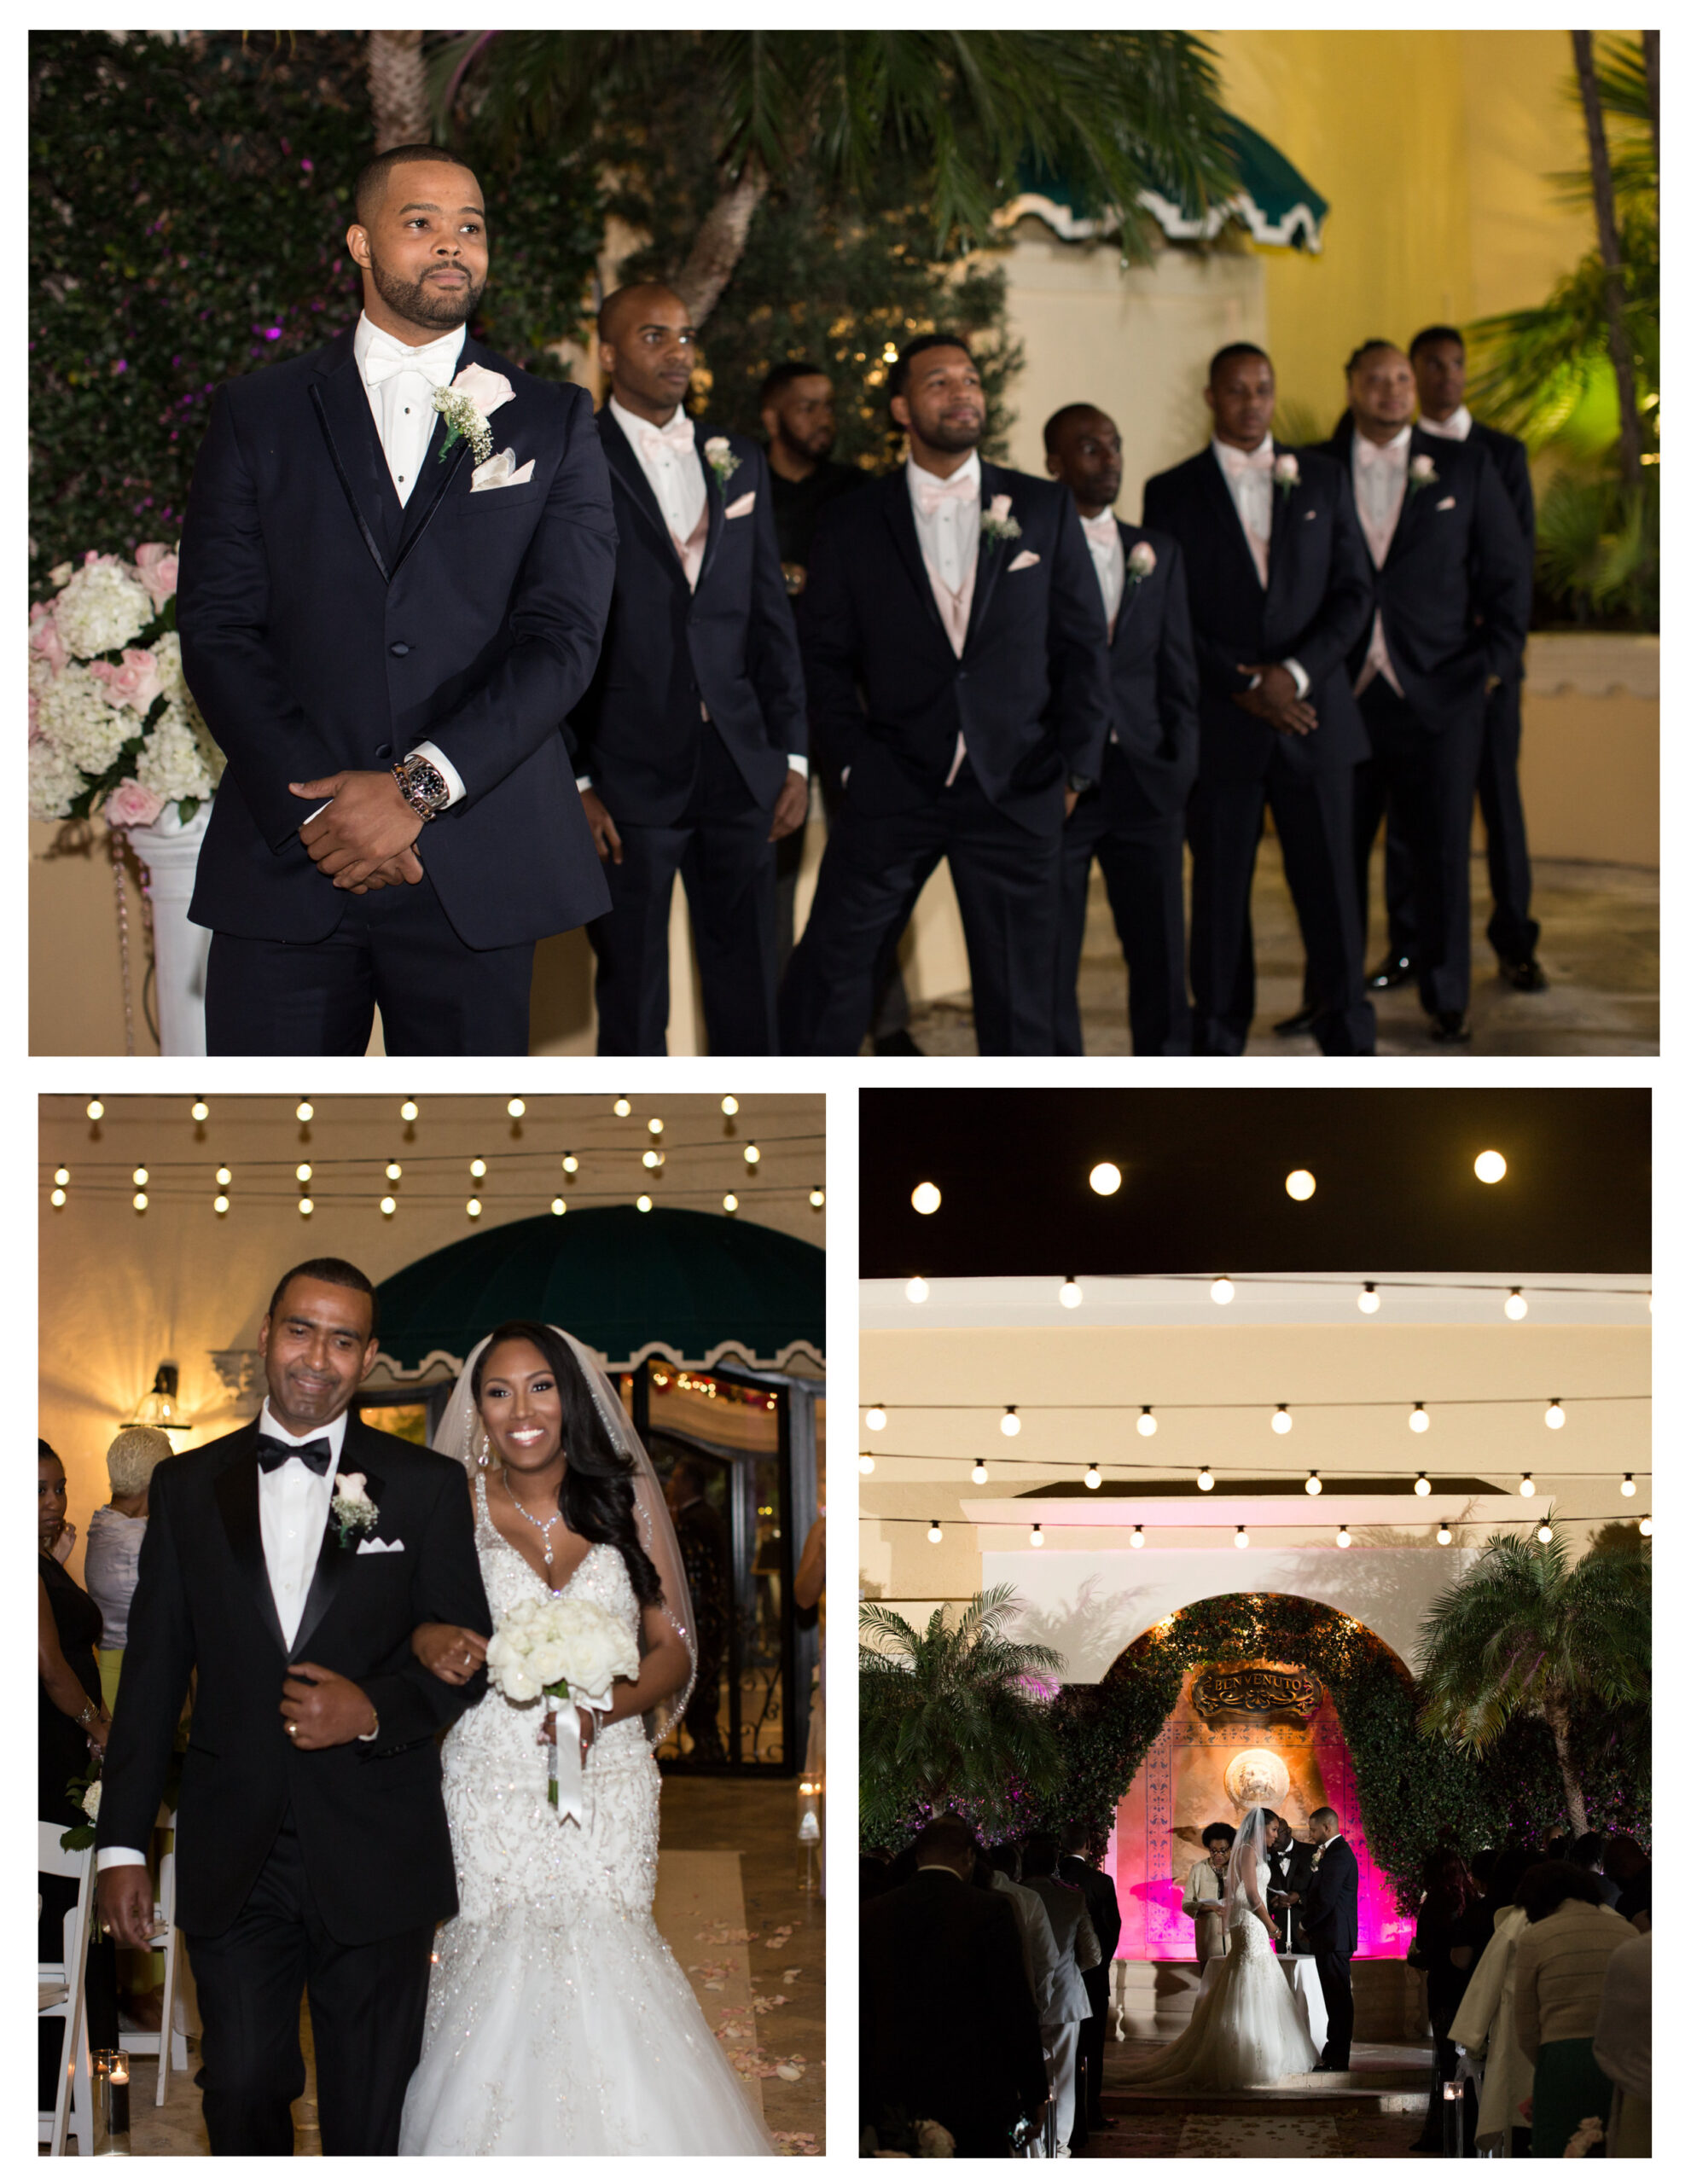 Benvenuto_wedding_Boynton_Beach_Jodi_Fjelde_Photography_Nikki_Otis_married_14.jpg